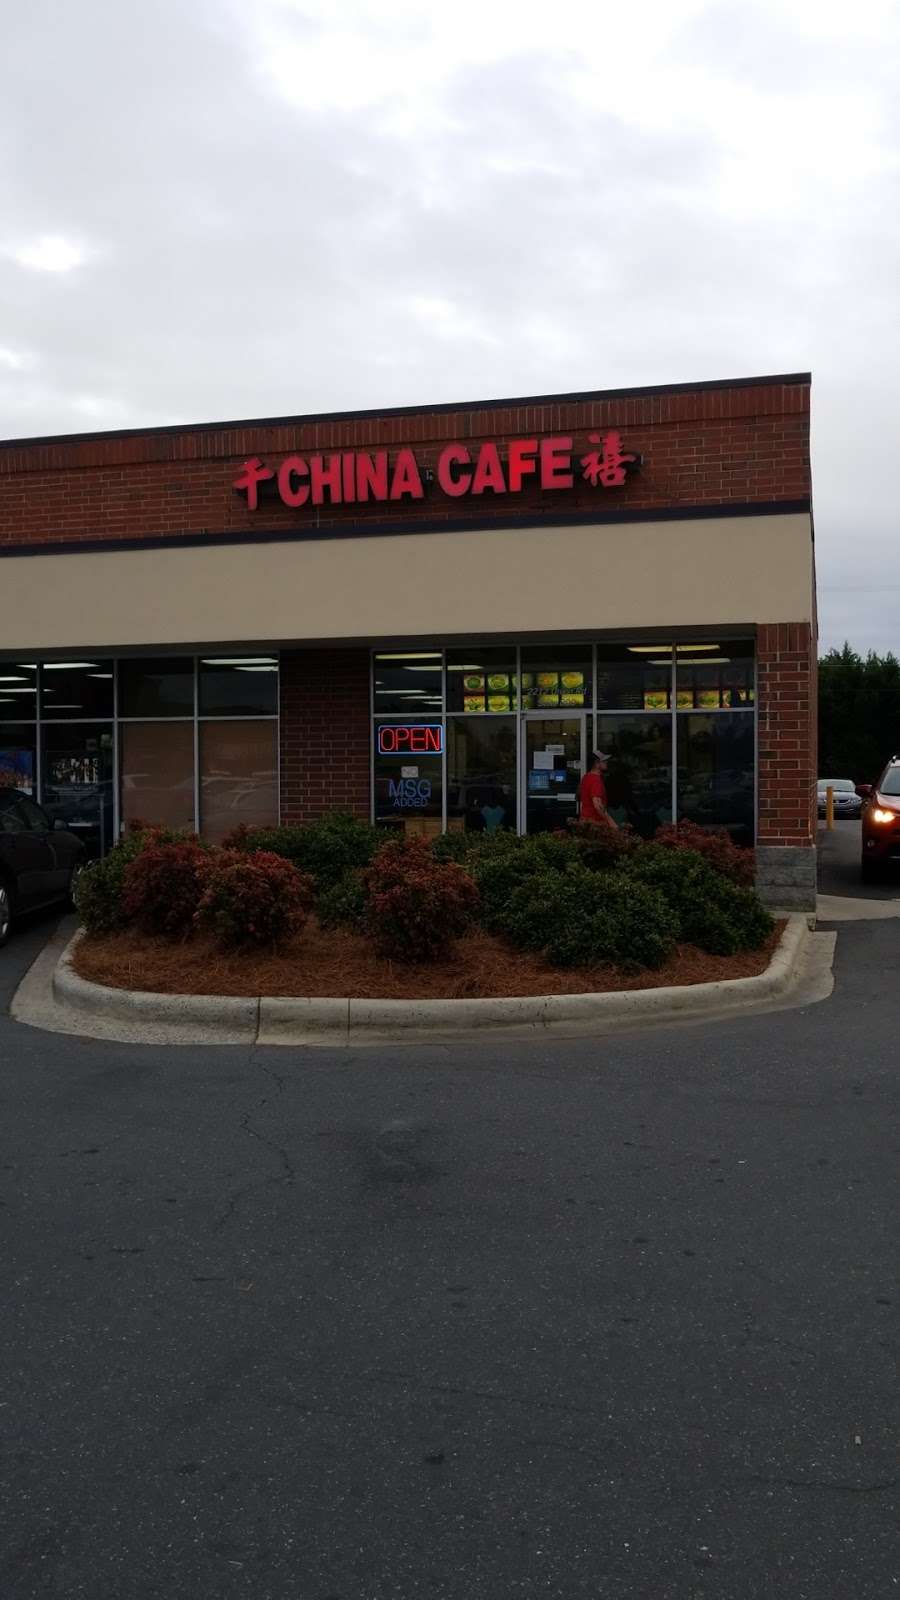 China Cafe | 3707 # 800, 2212 Union Rd, Gastonia, NC 28054, USA | Phone: (704) 810-8500